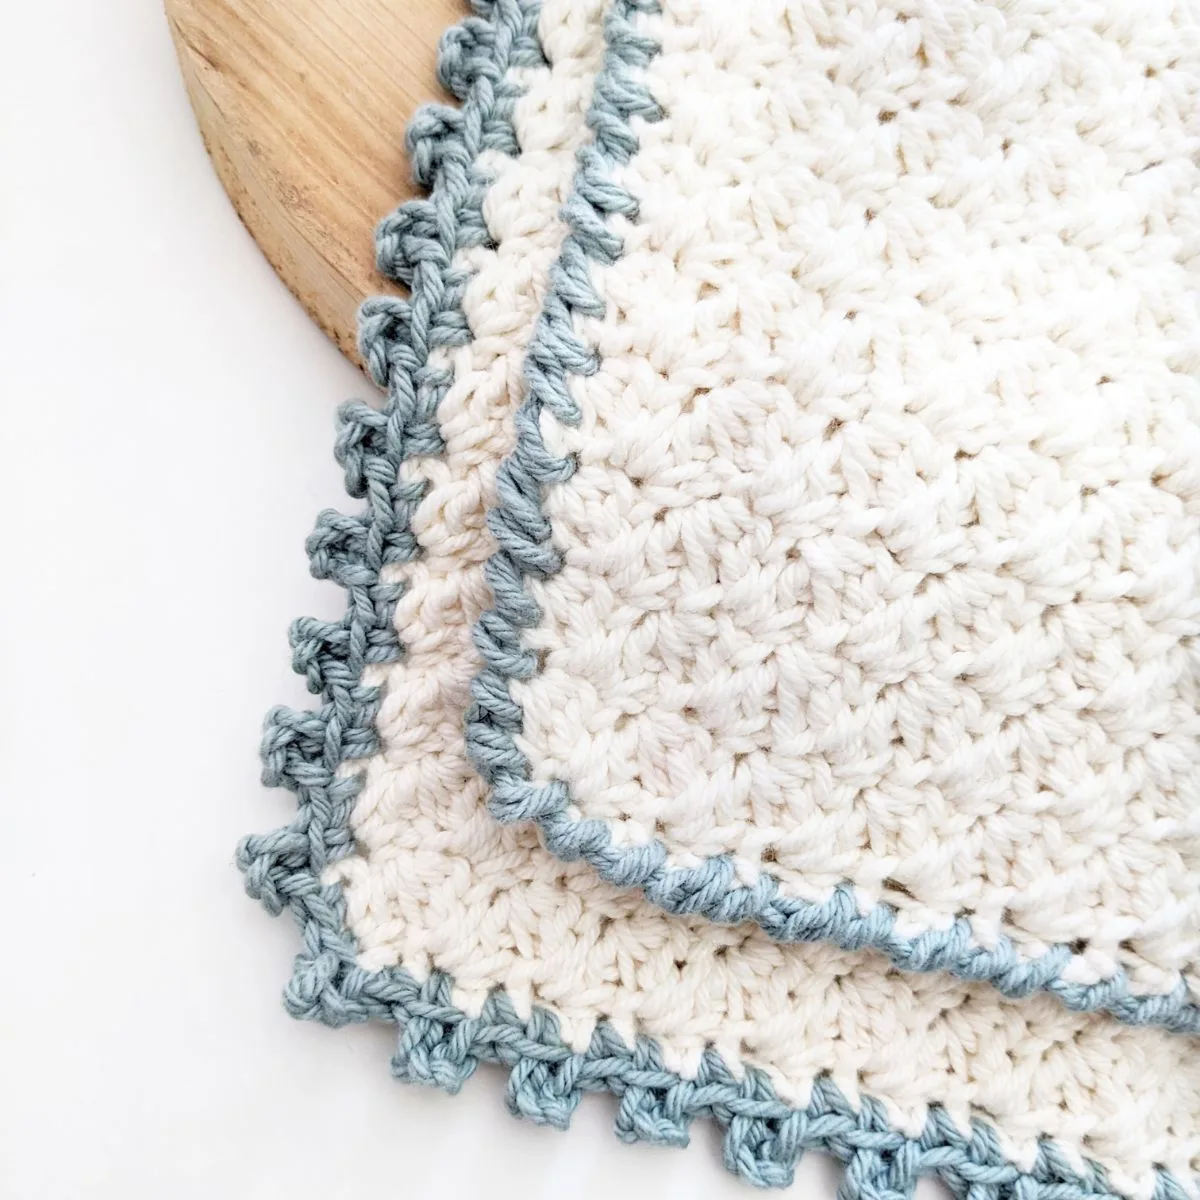 A white cotton crochet washcloth with a picot stitch edge border.